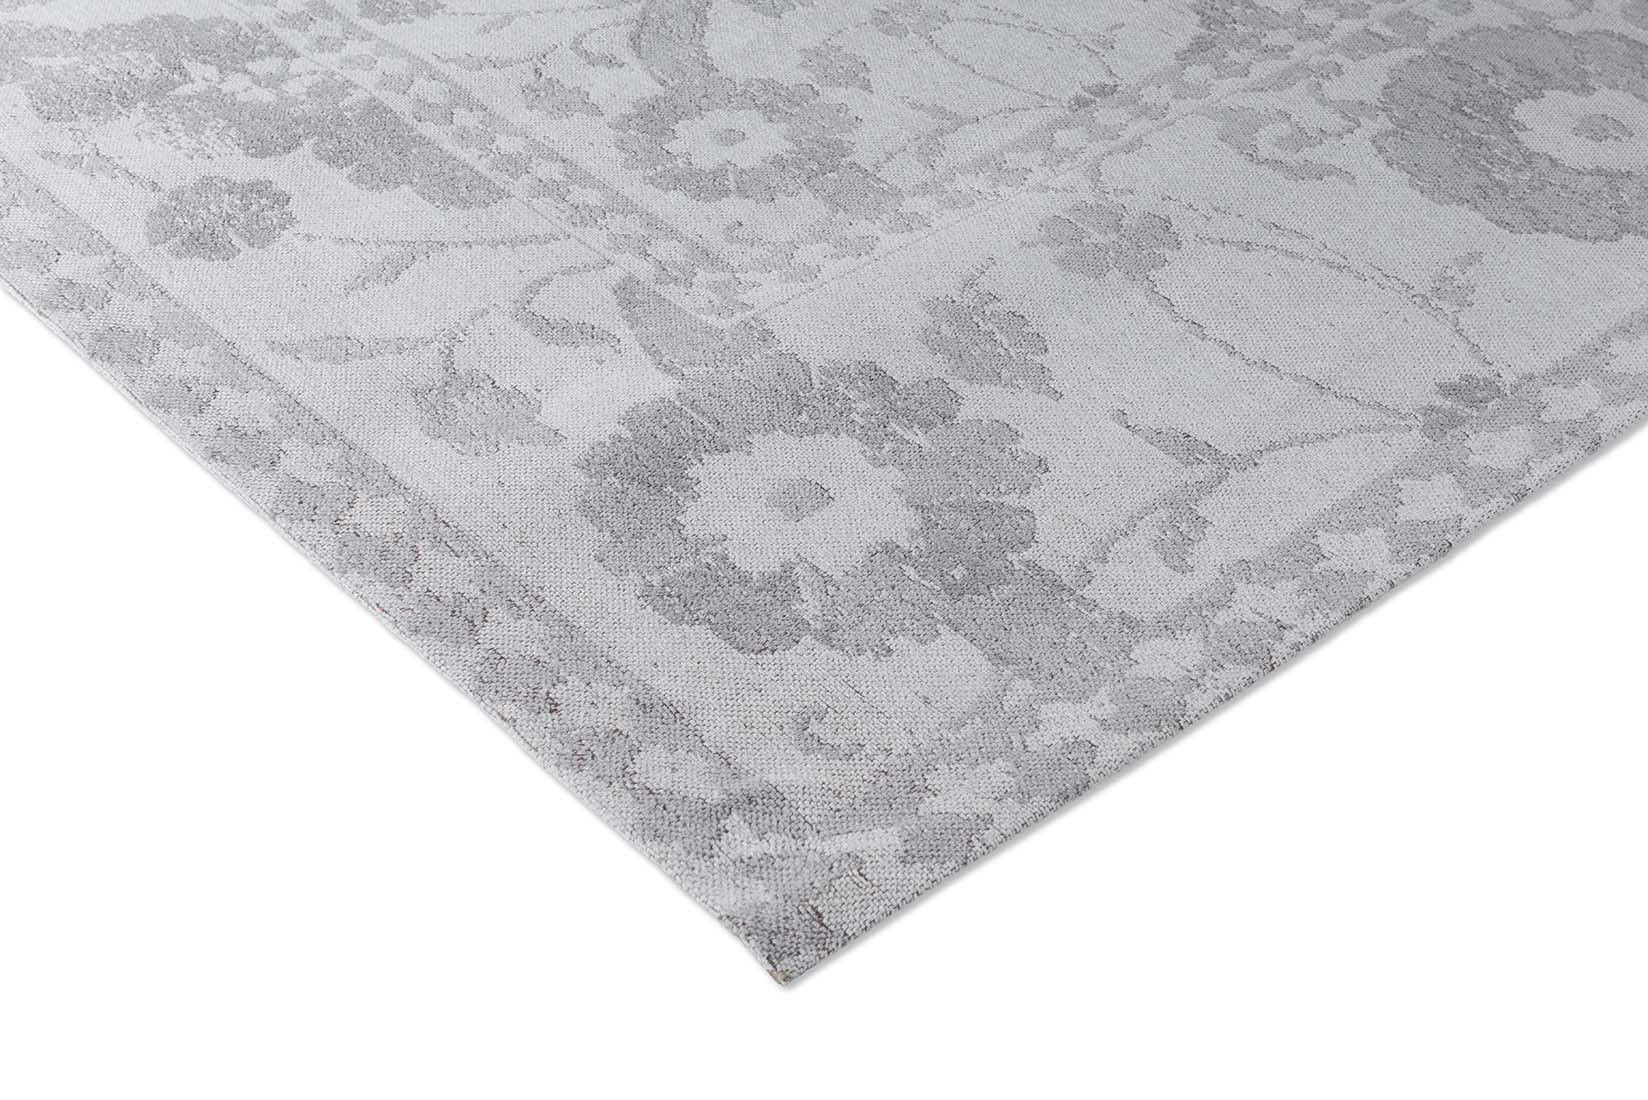 Vintage floral style cotton grey rug
